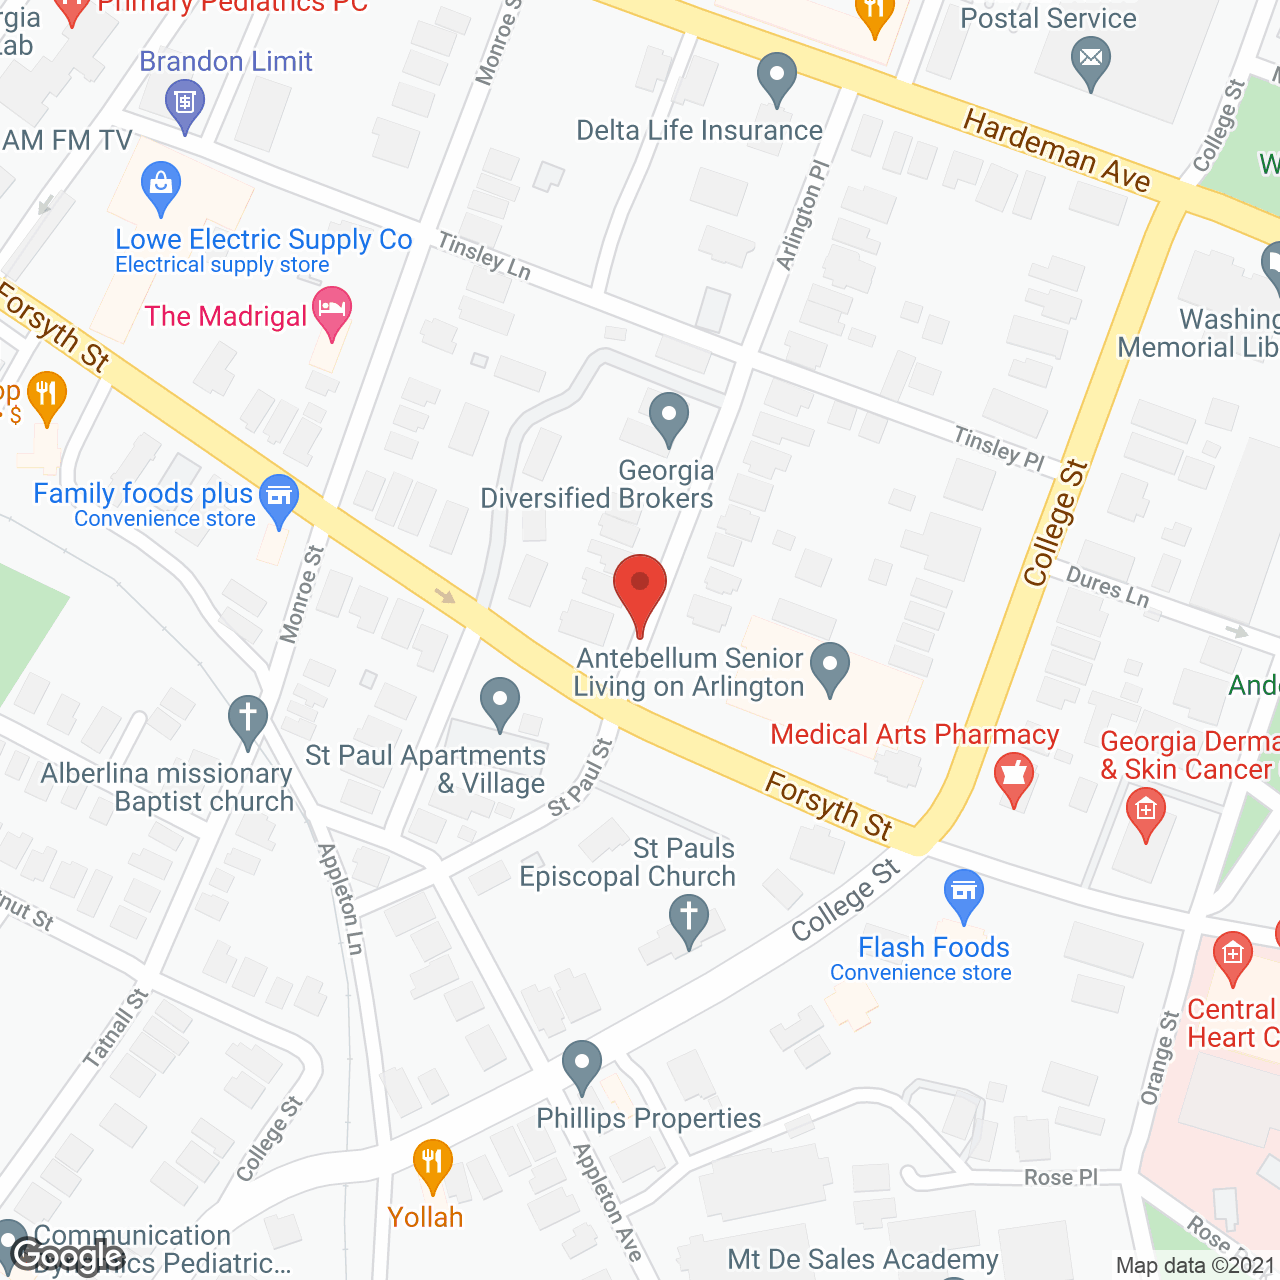 Antebellum on Arlington in google map